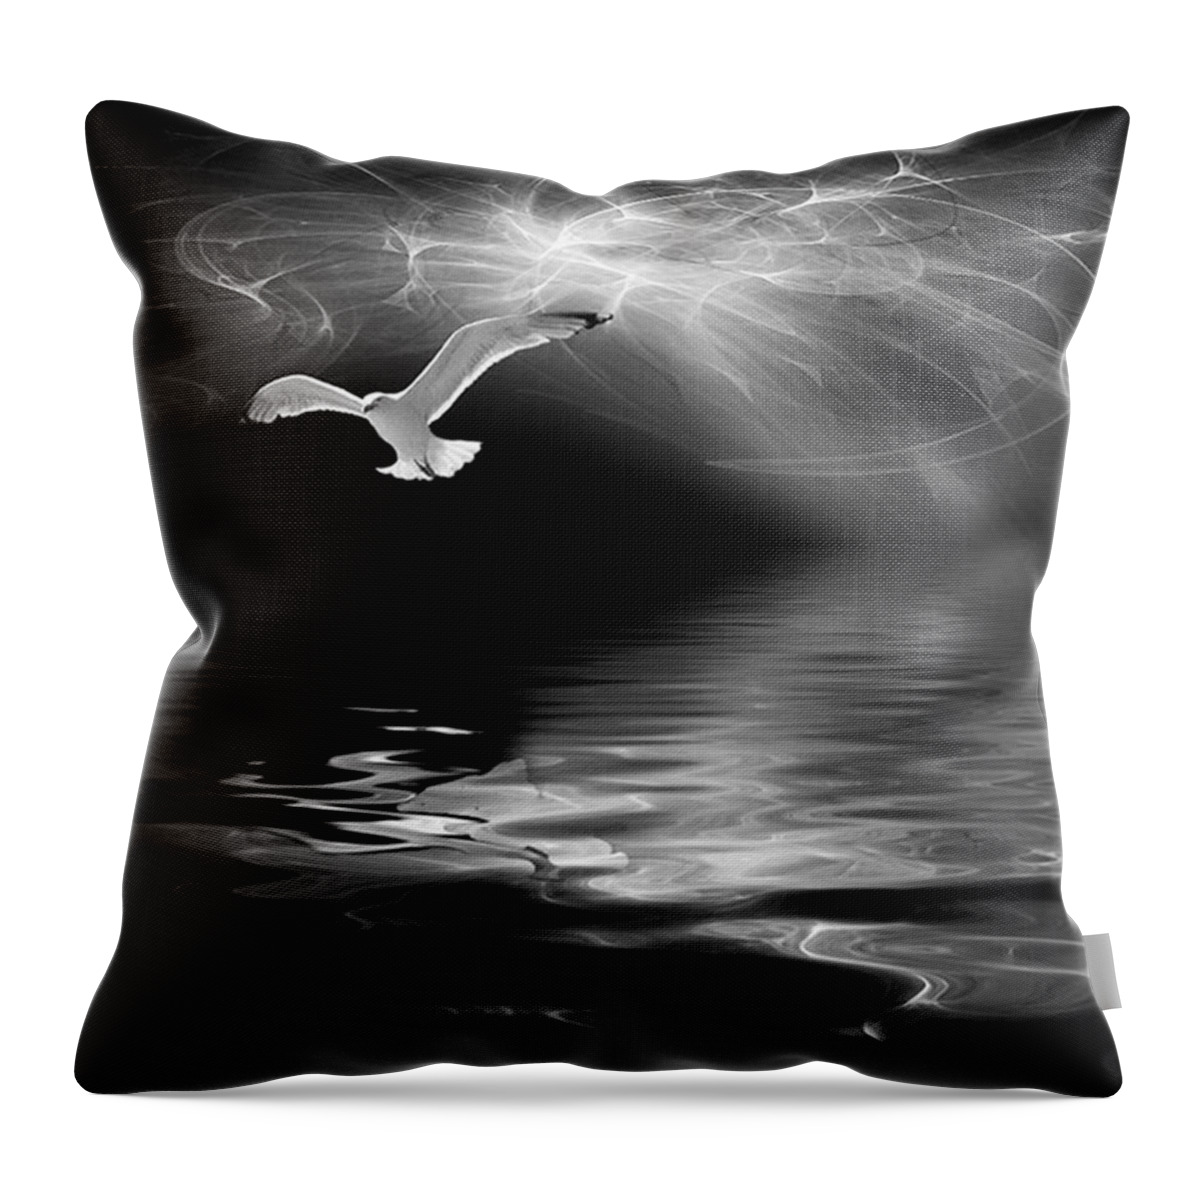 Digitalpainting Throw Pillow featuring the photograph Harbinger #1 by John Edwards